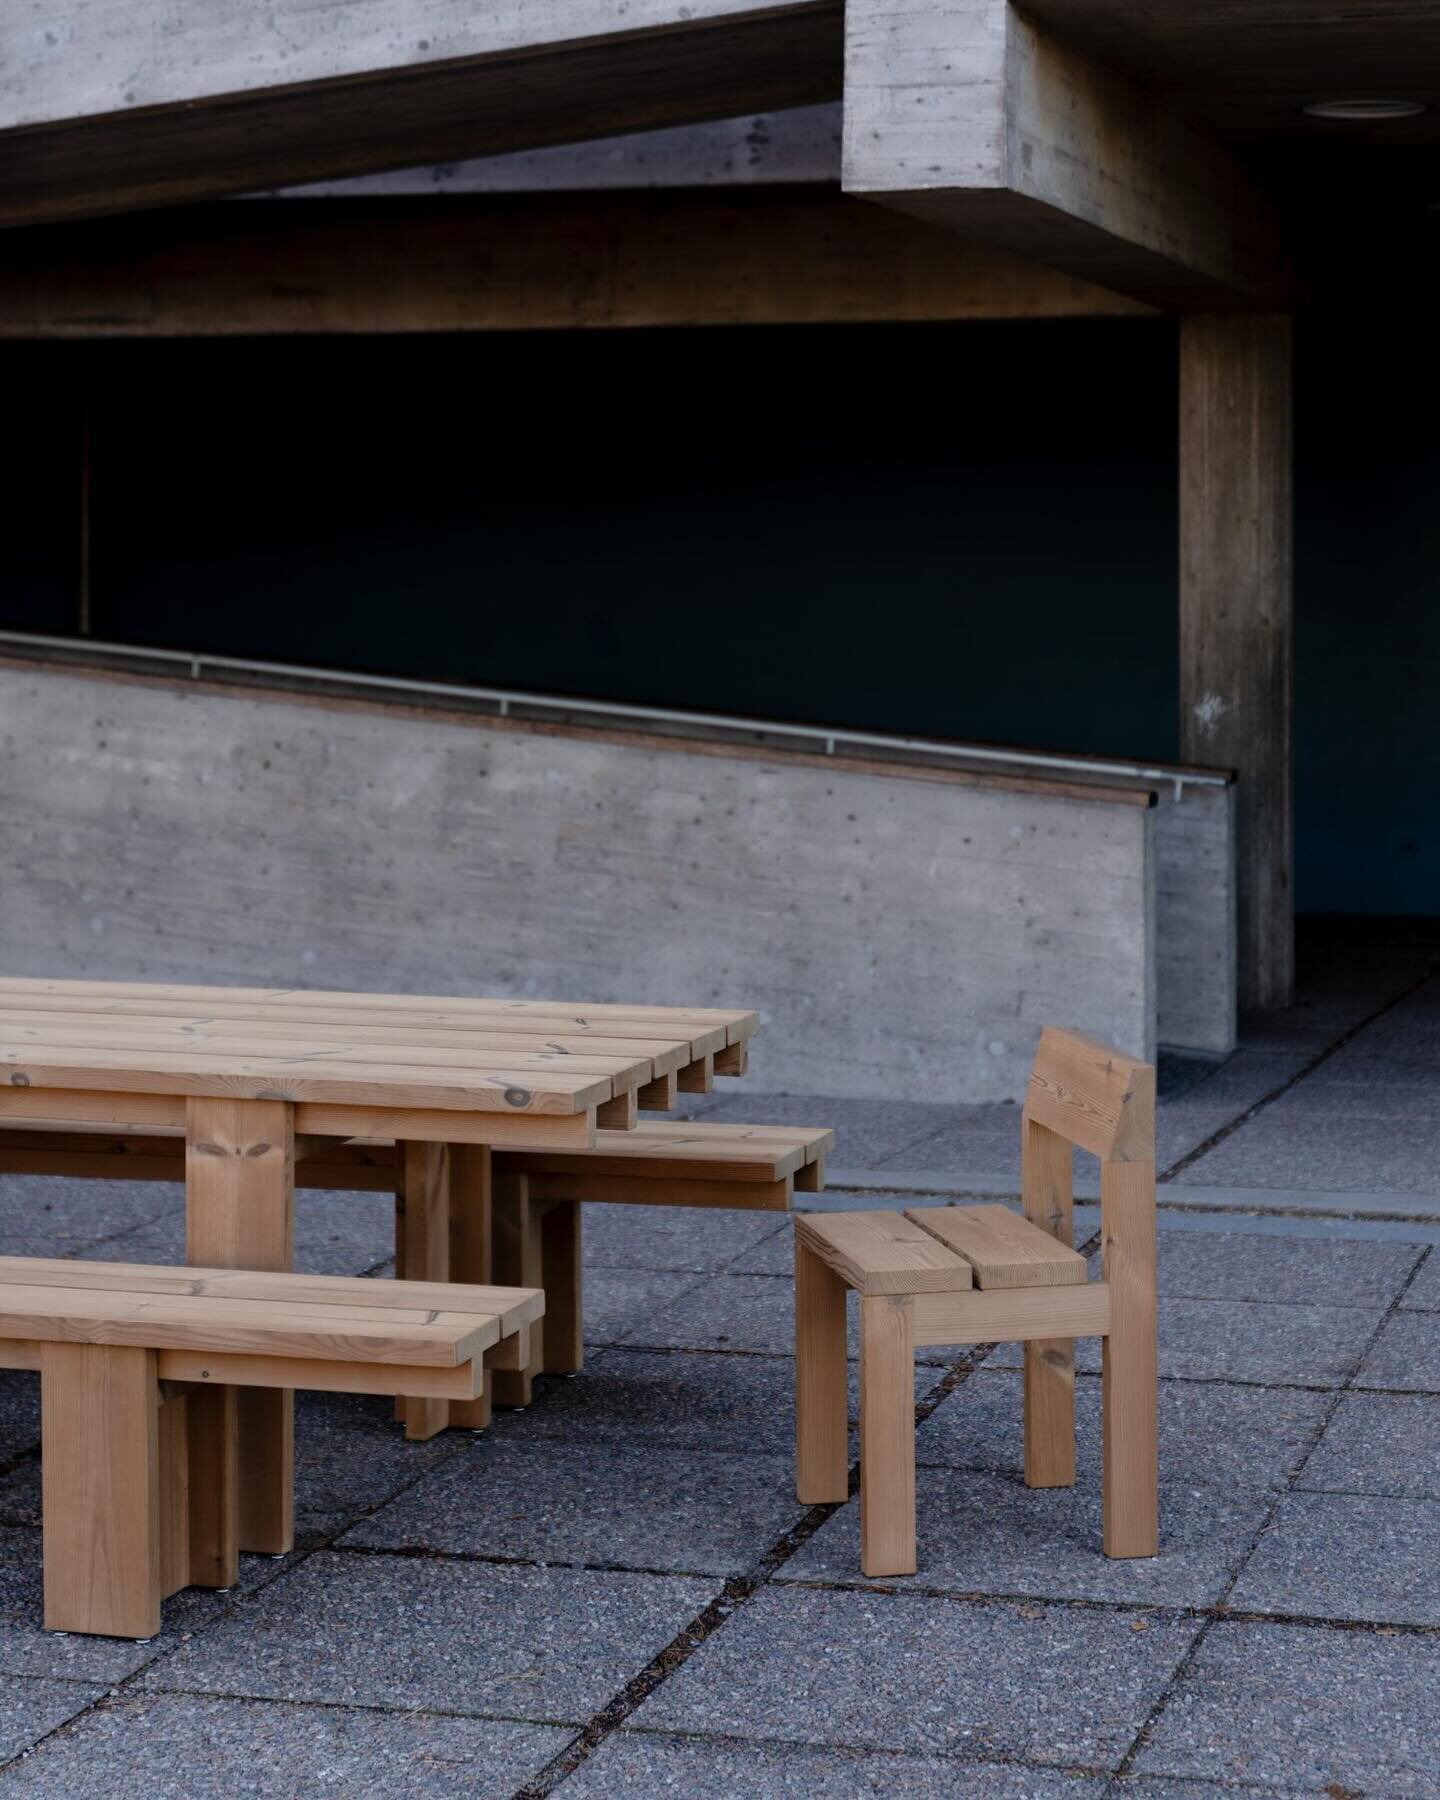 013 Osa Outdoor Dining Chair and 013 Osa Outdoor Dining Table

#outdoordiningtable #vaarnii #vaarniioutdoor #vaarniifurniture #vaarniichair #klaus #klaustoronto #klausshowroom #klausn #klausfurniture